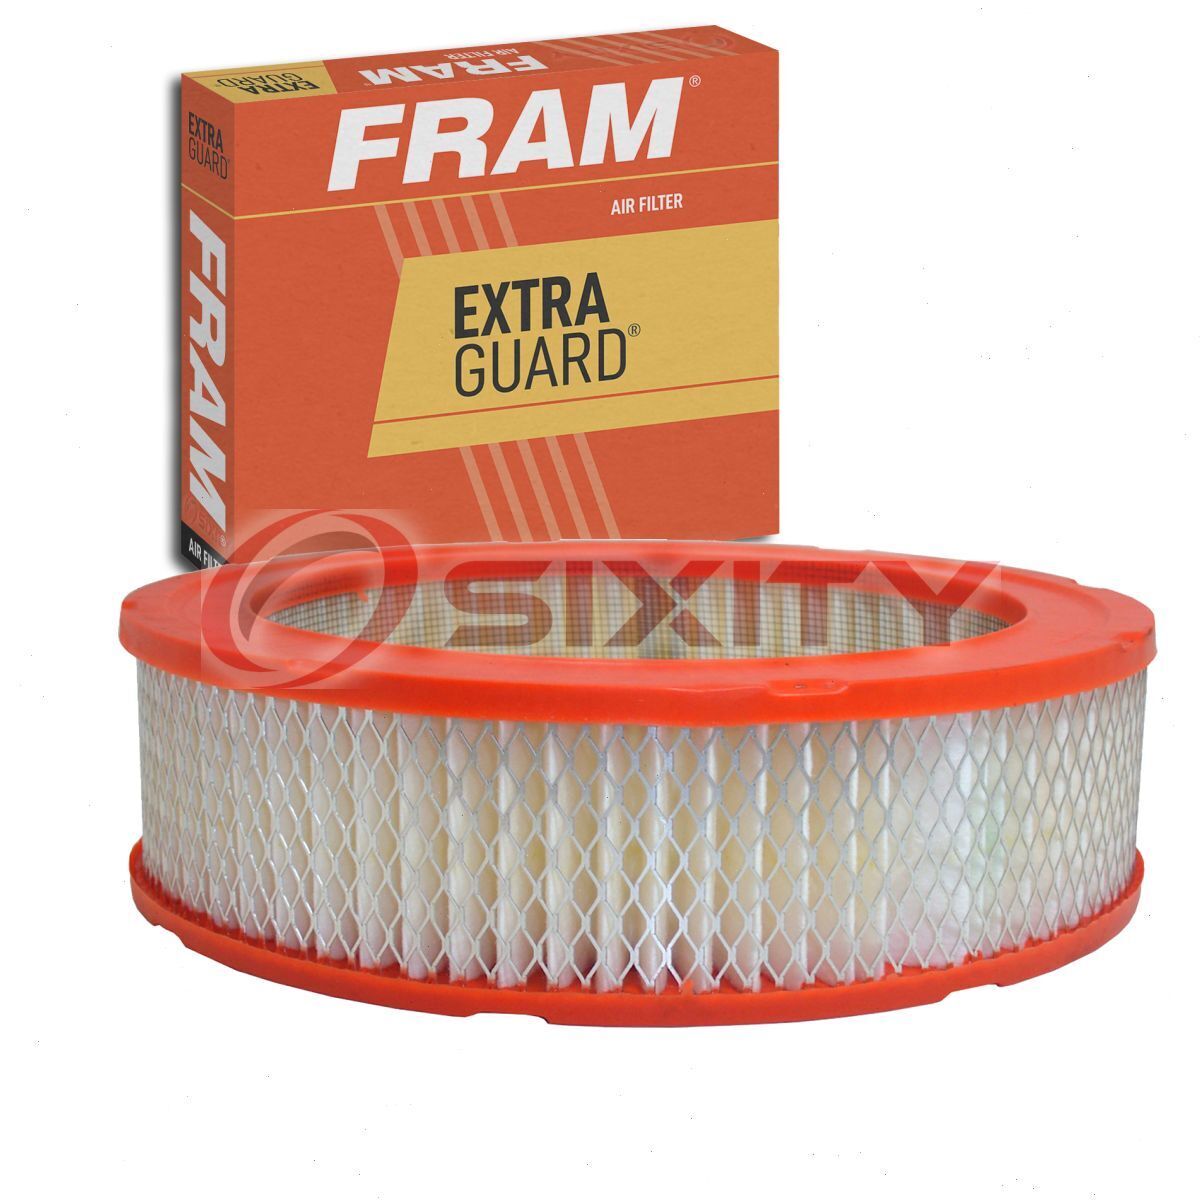 FRAM Extra Guard Air Filter for 1975-1983 Chrysler Cordoba Intake Inlet px